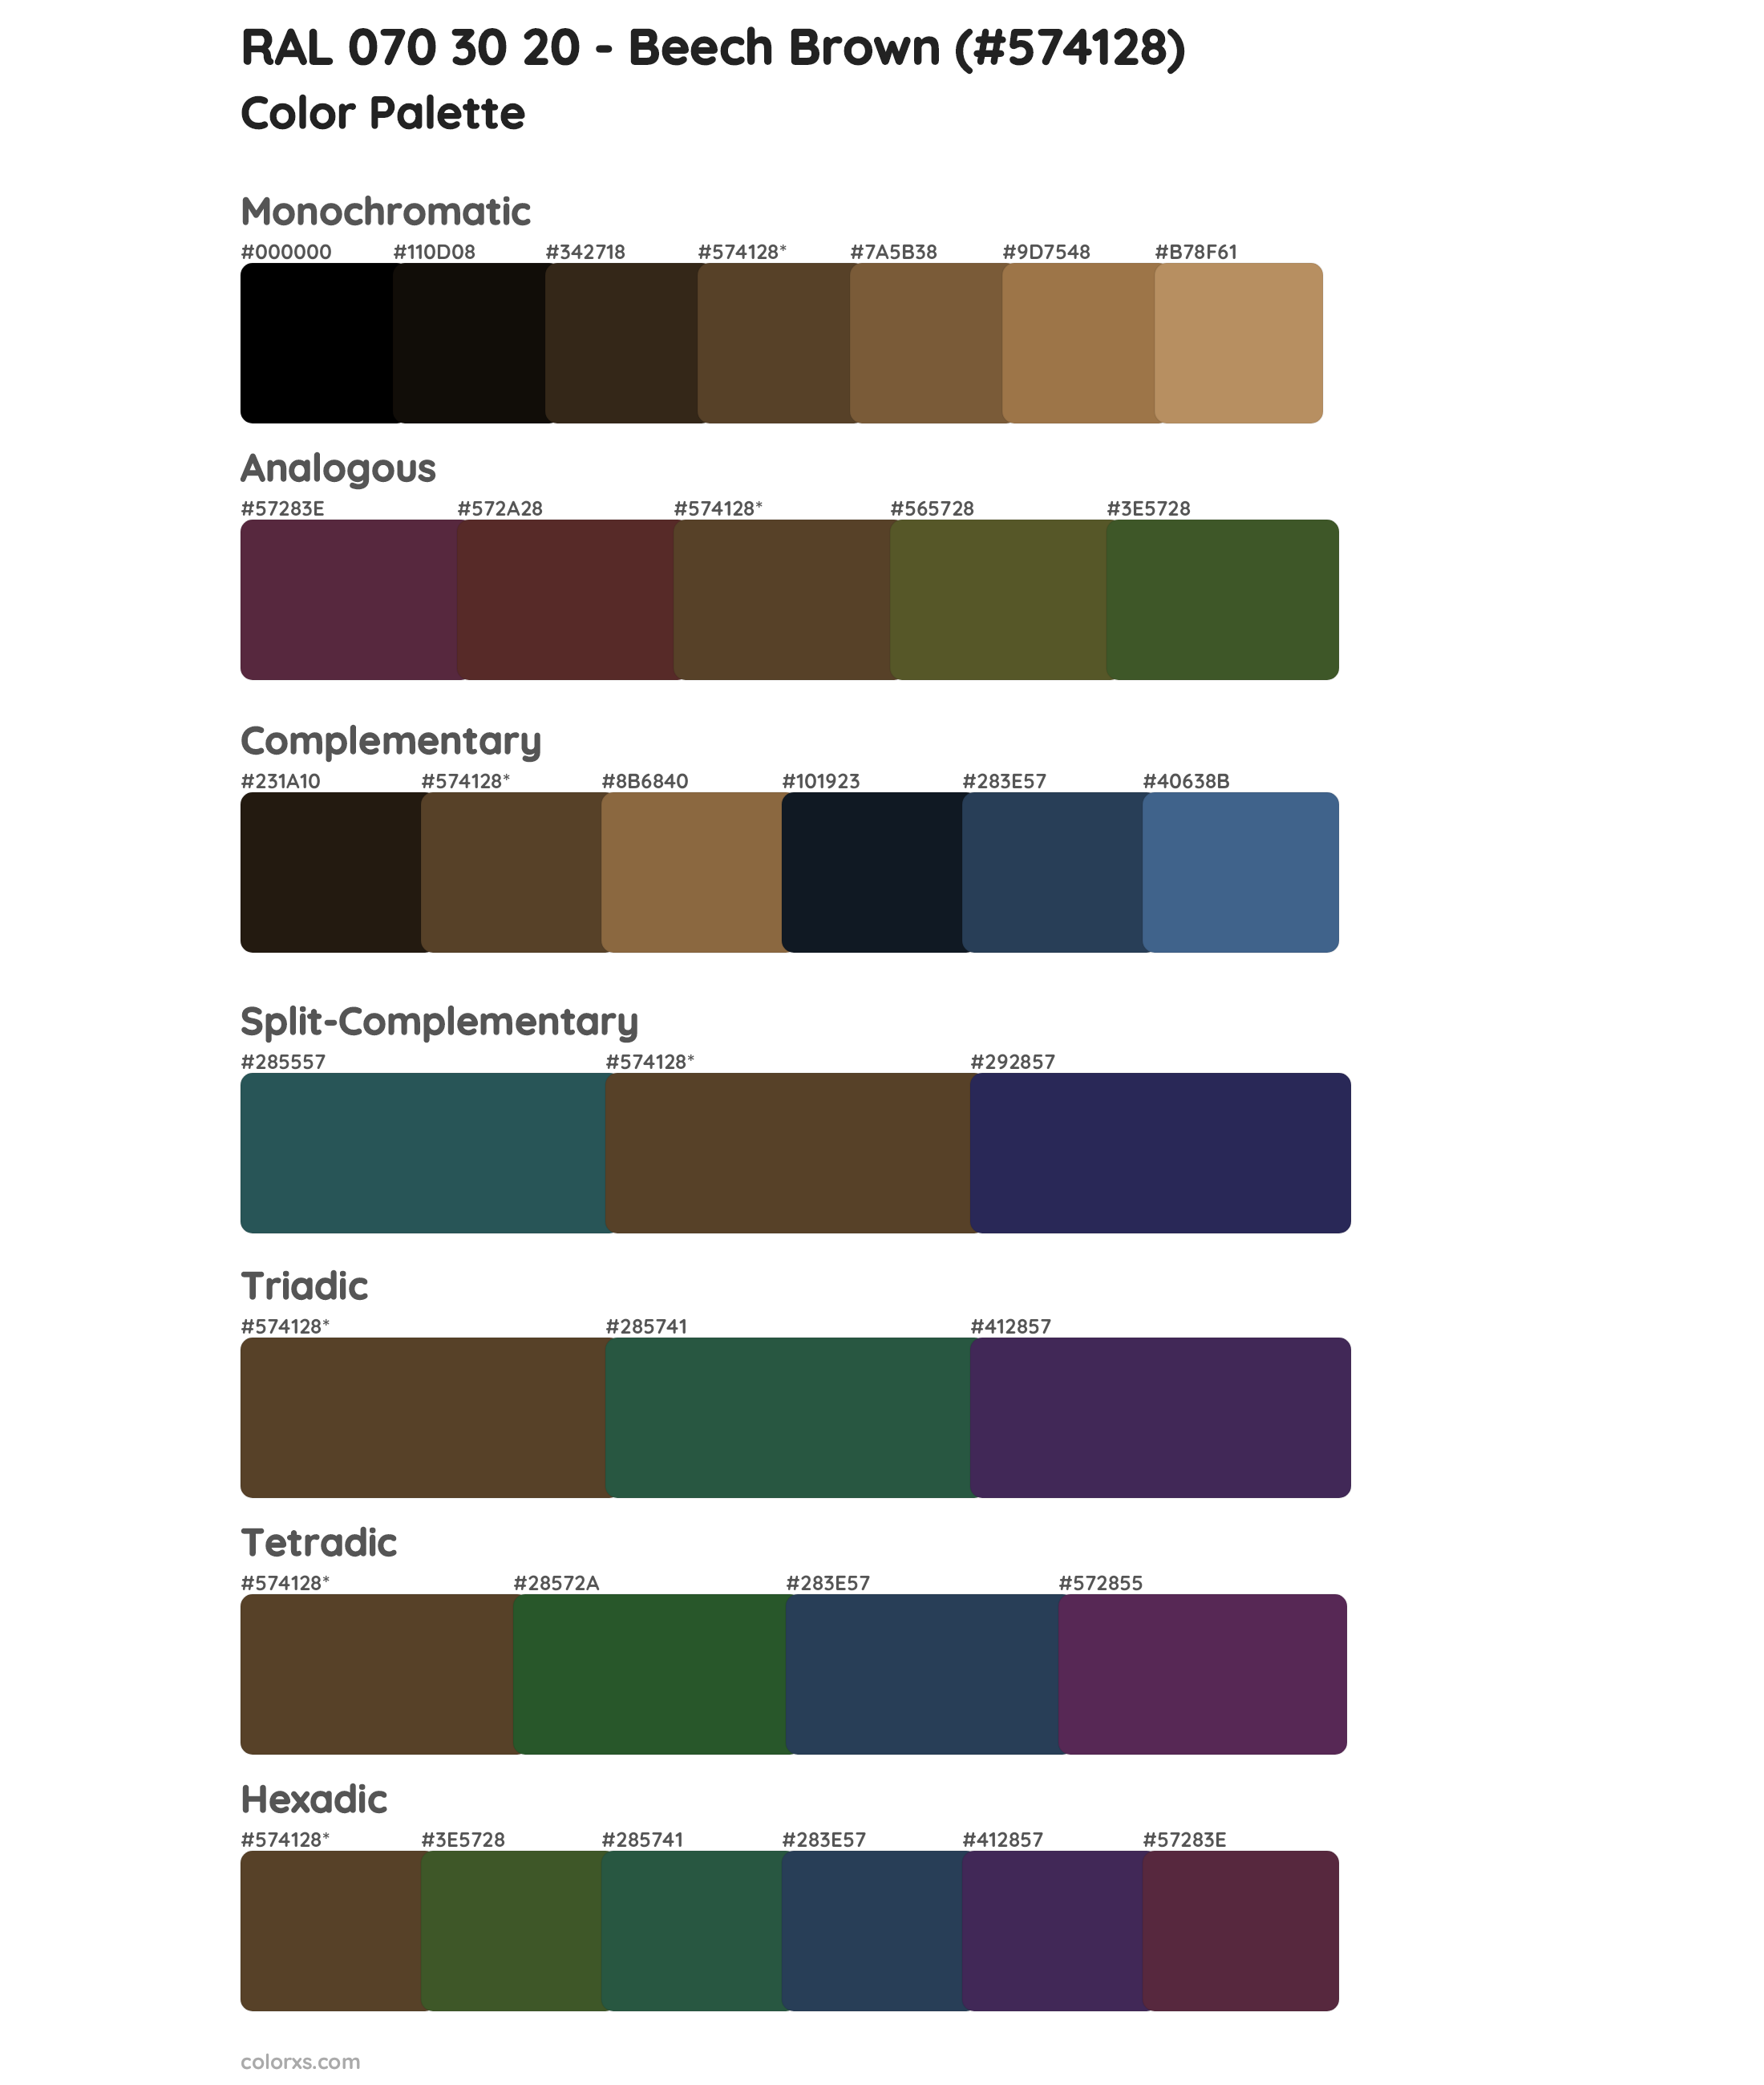 RAL 070 30 20 - Beech Brown Color Scheme Palettes